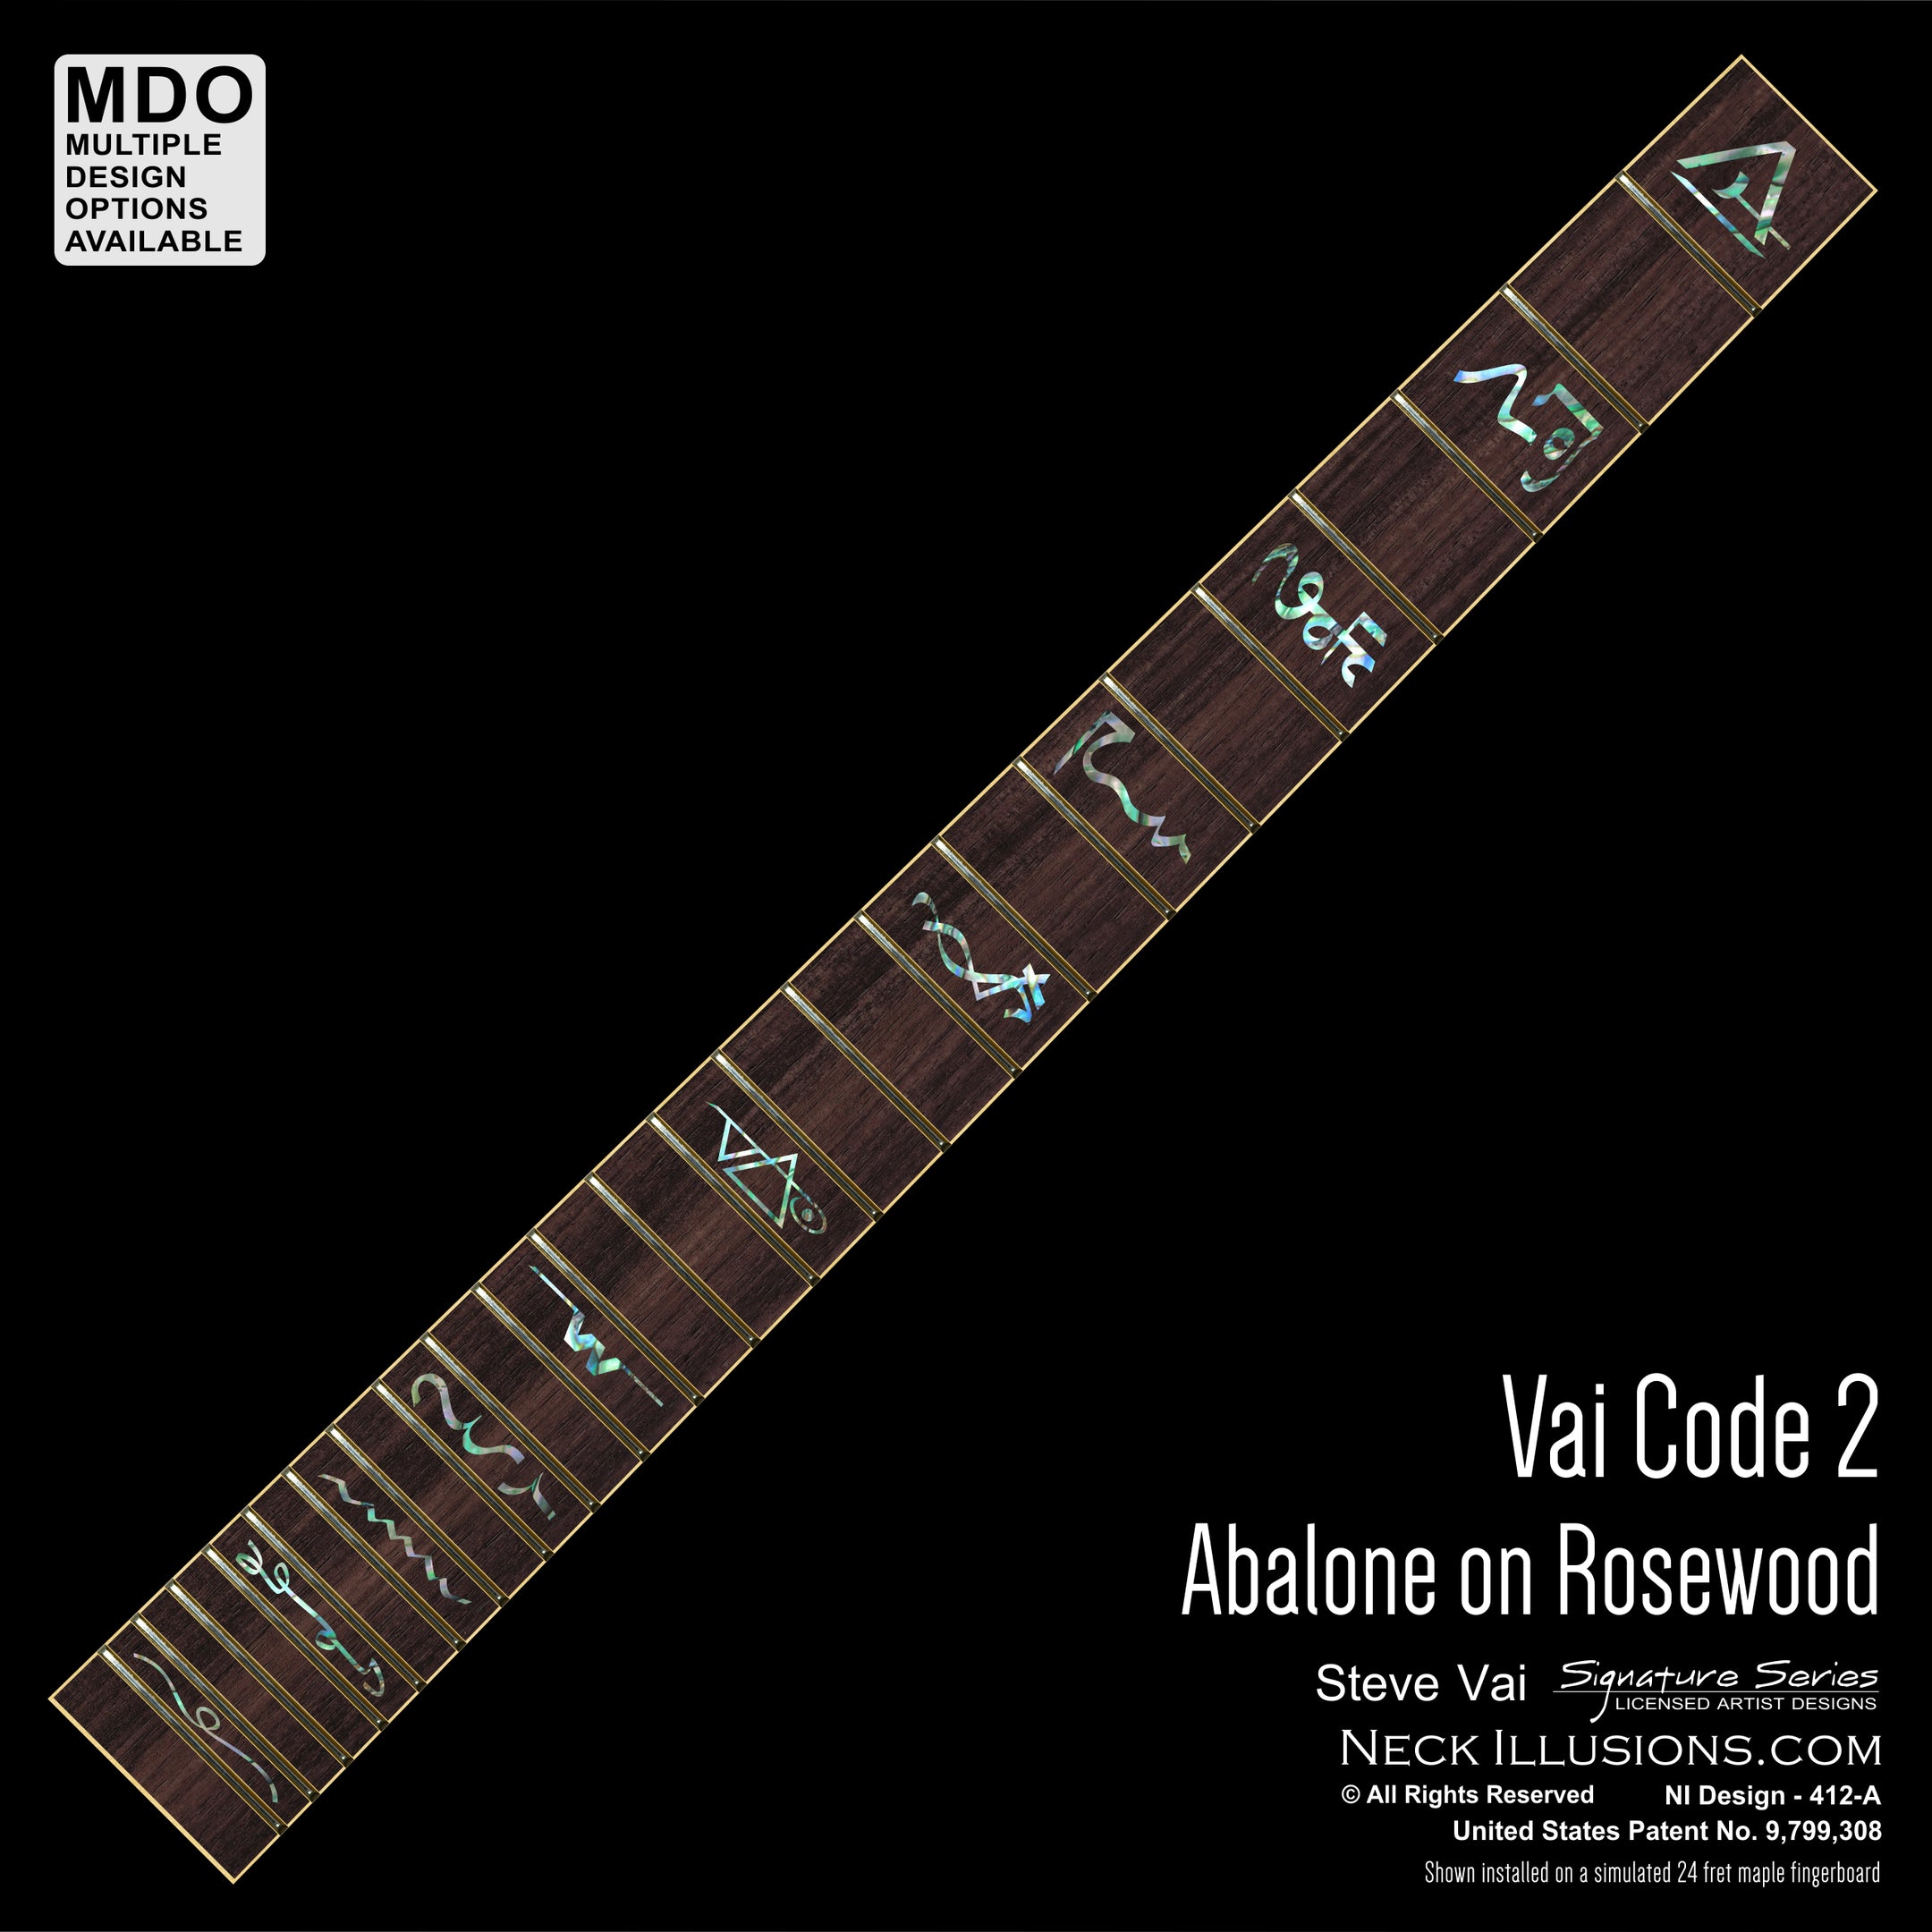 Steve Vai - Vai Code 2